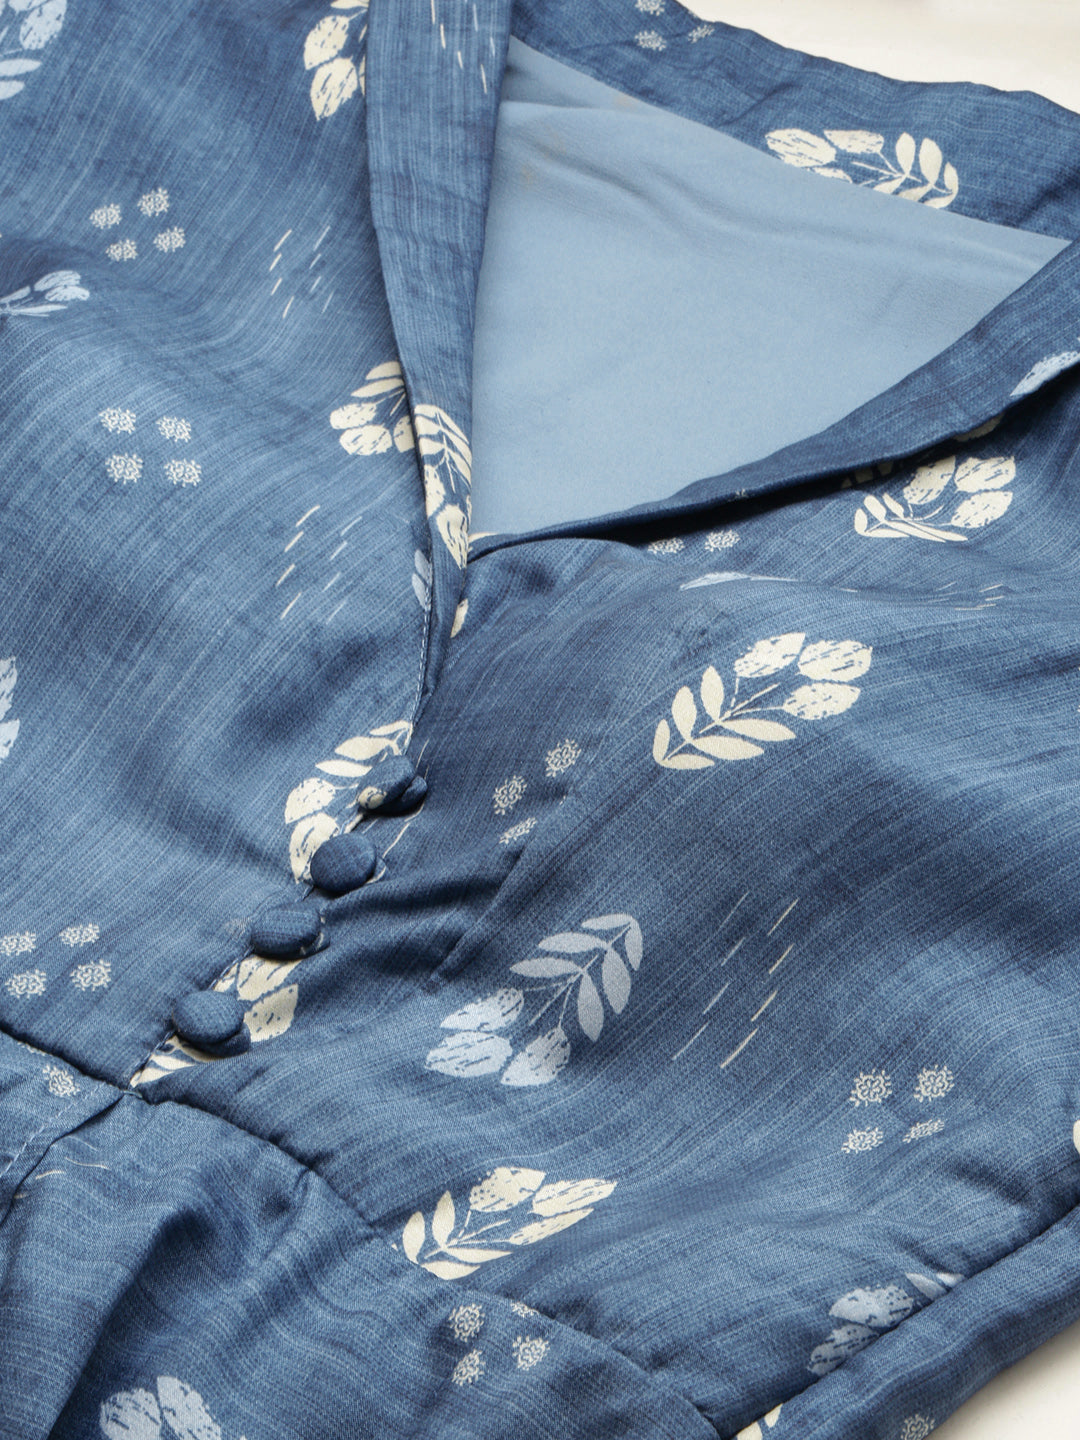 Yale Blue Printed Low Shawl Collar Midi Dress